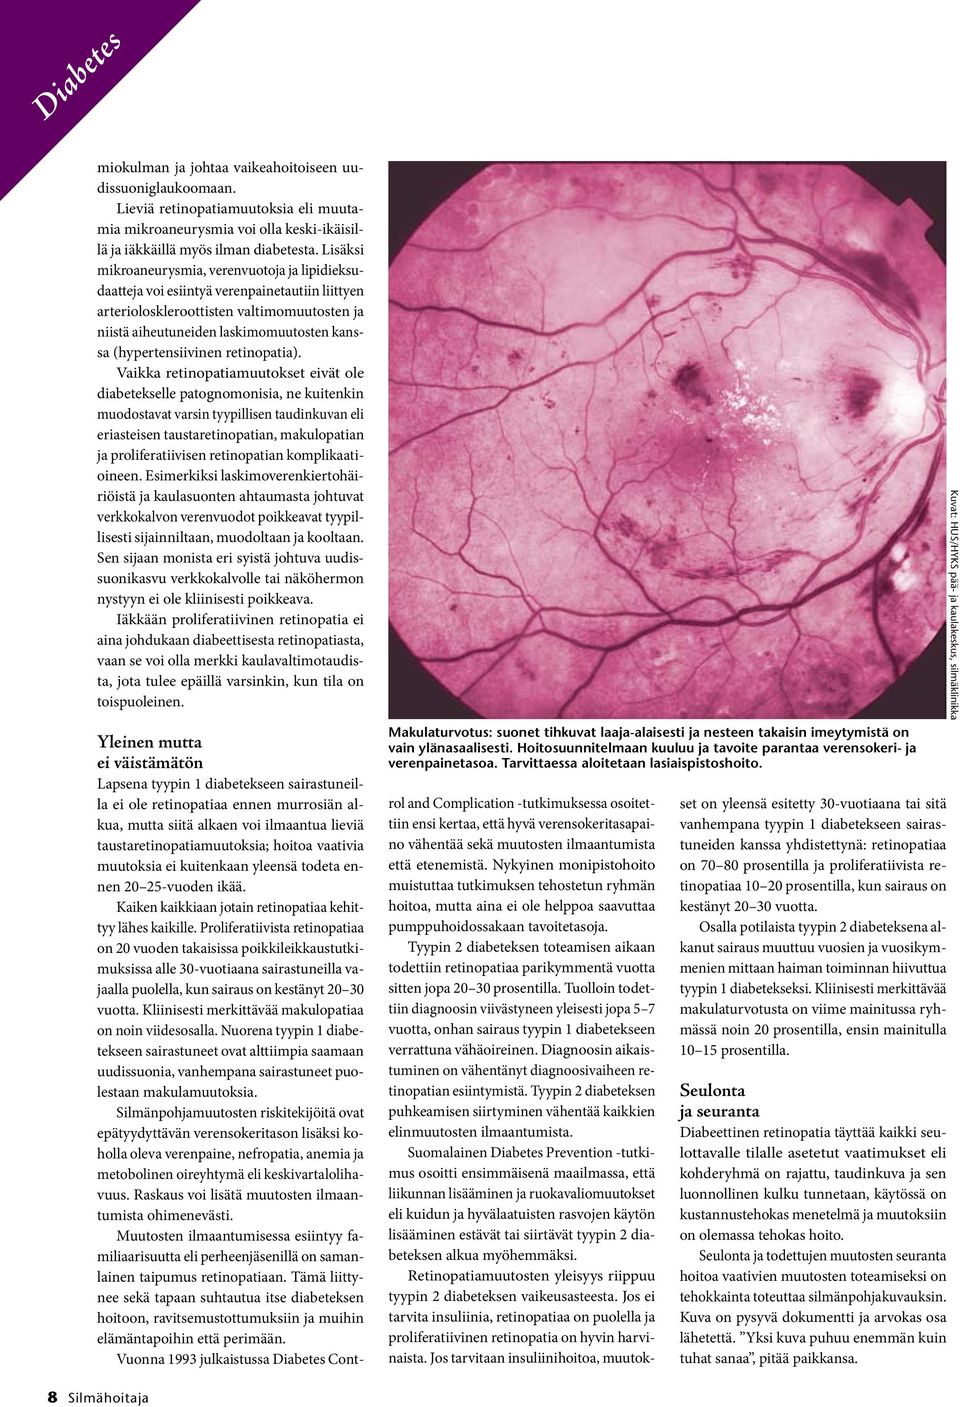 (hypertensiivinen retinopatia).